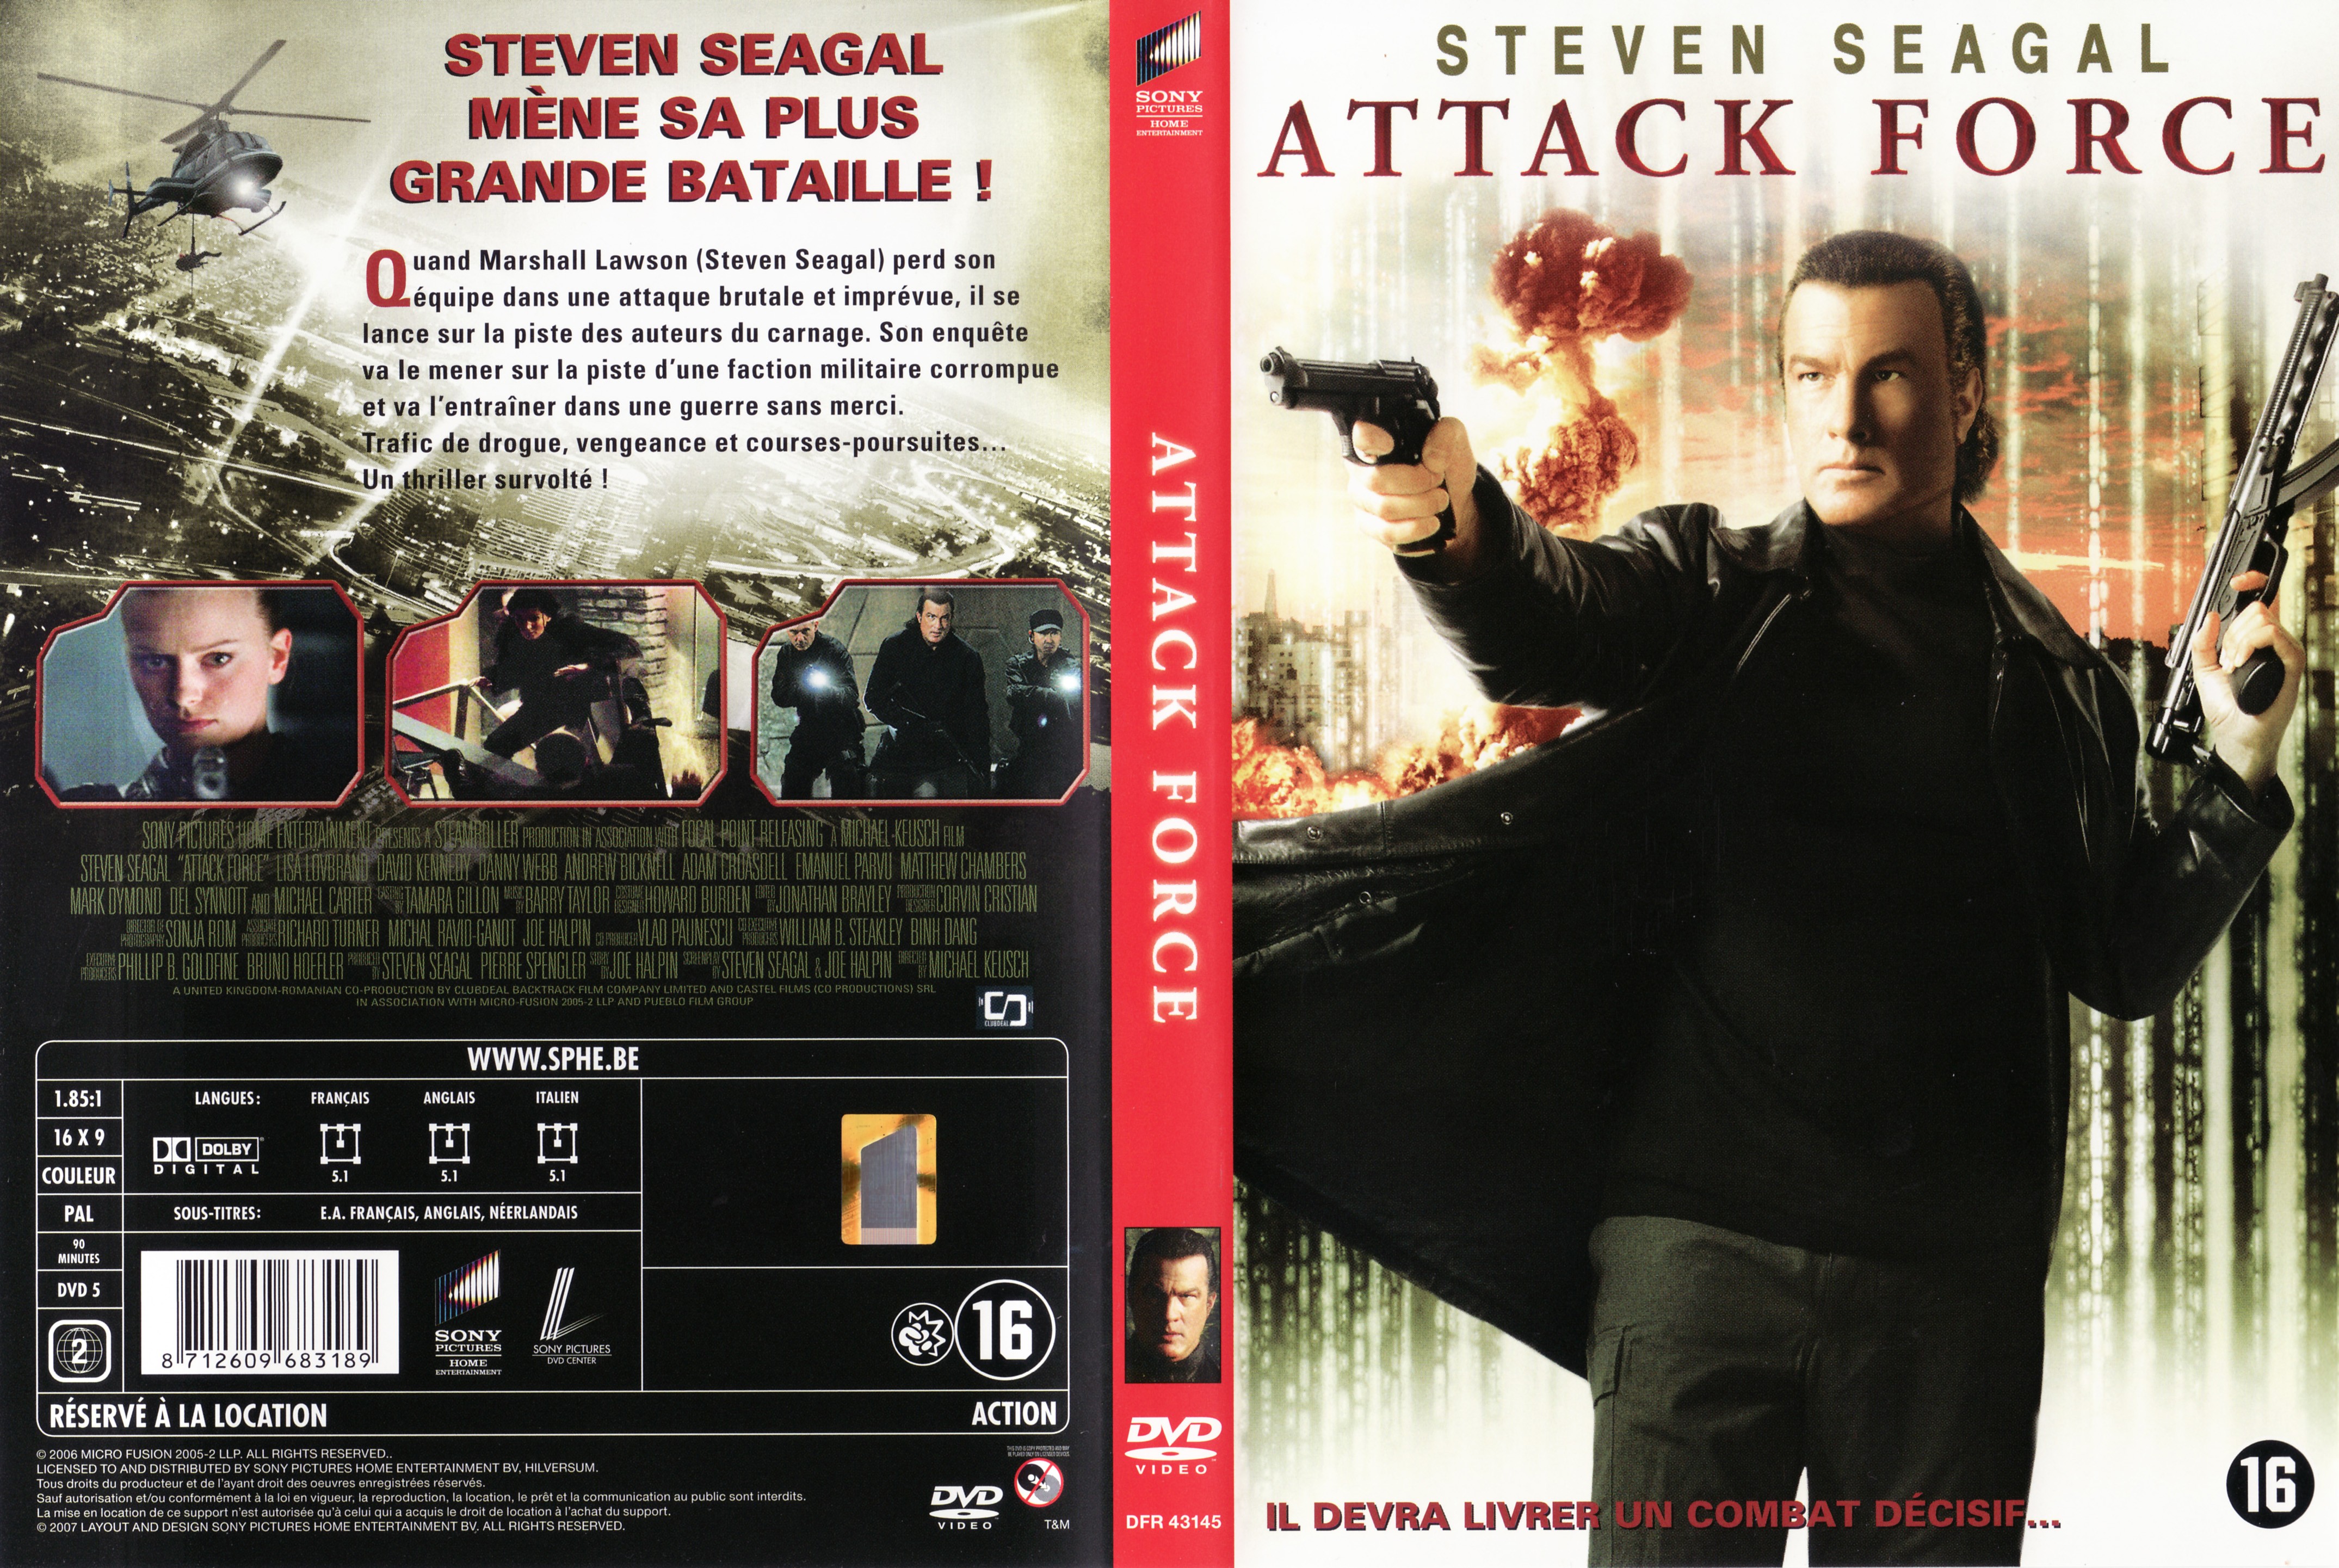 Jaquette DVD Attack force v3